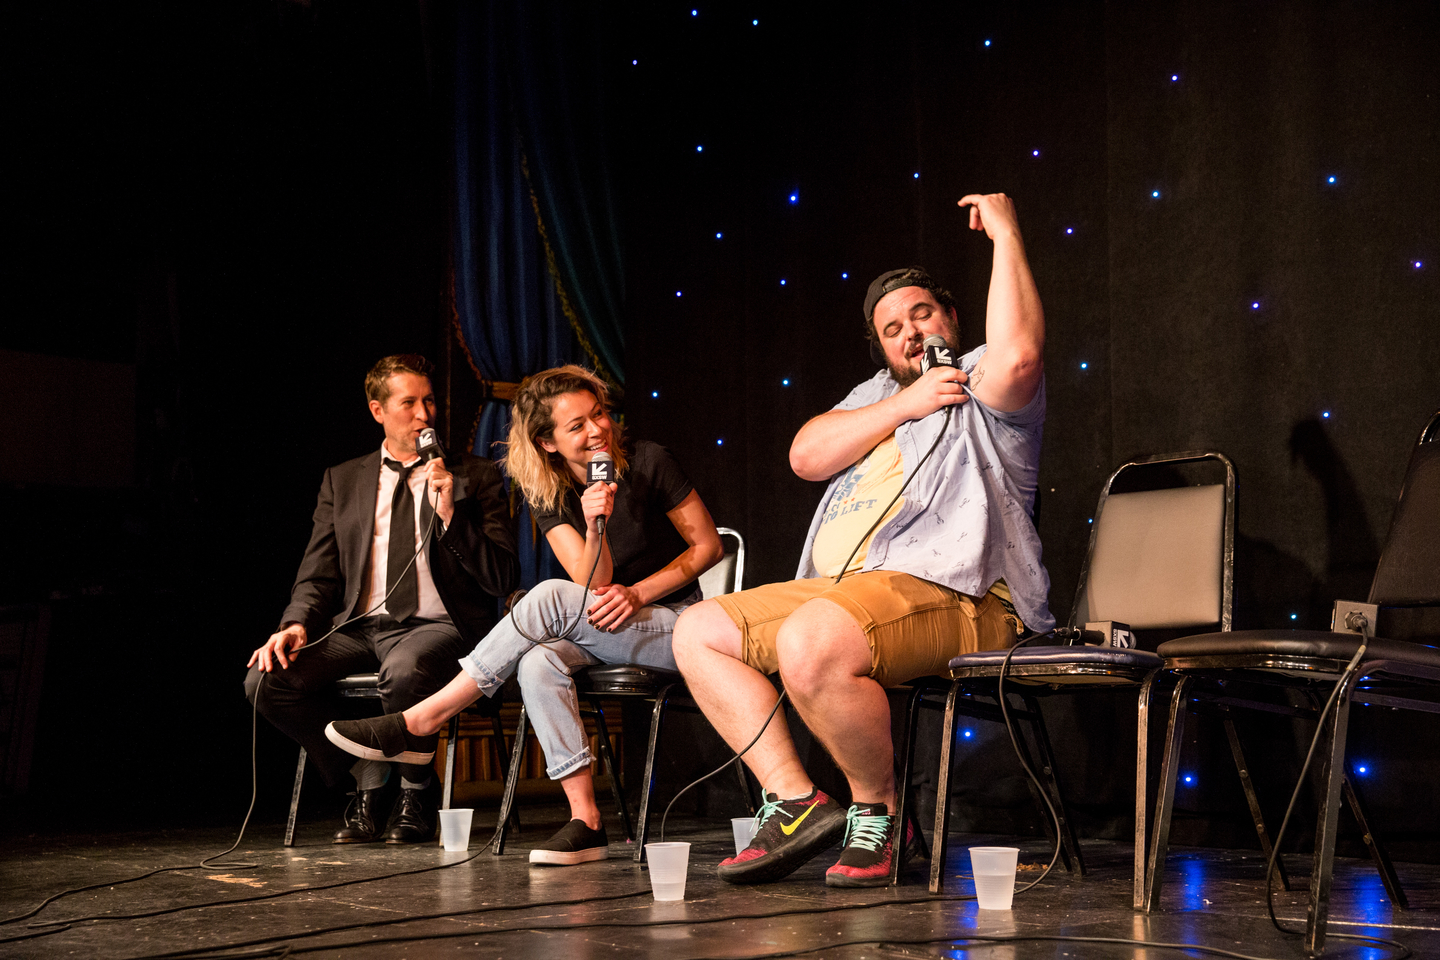 Scott Aukerman, Tatiana Maslany, and Jon Gabrus at Comedy Bang! Bang! Photo by Alexa Gonzalez Wagner